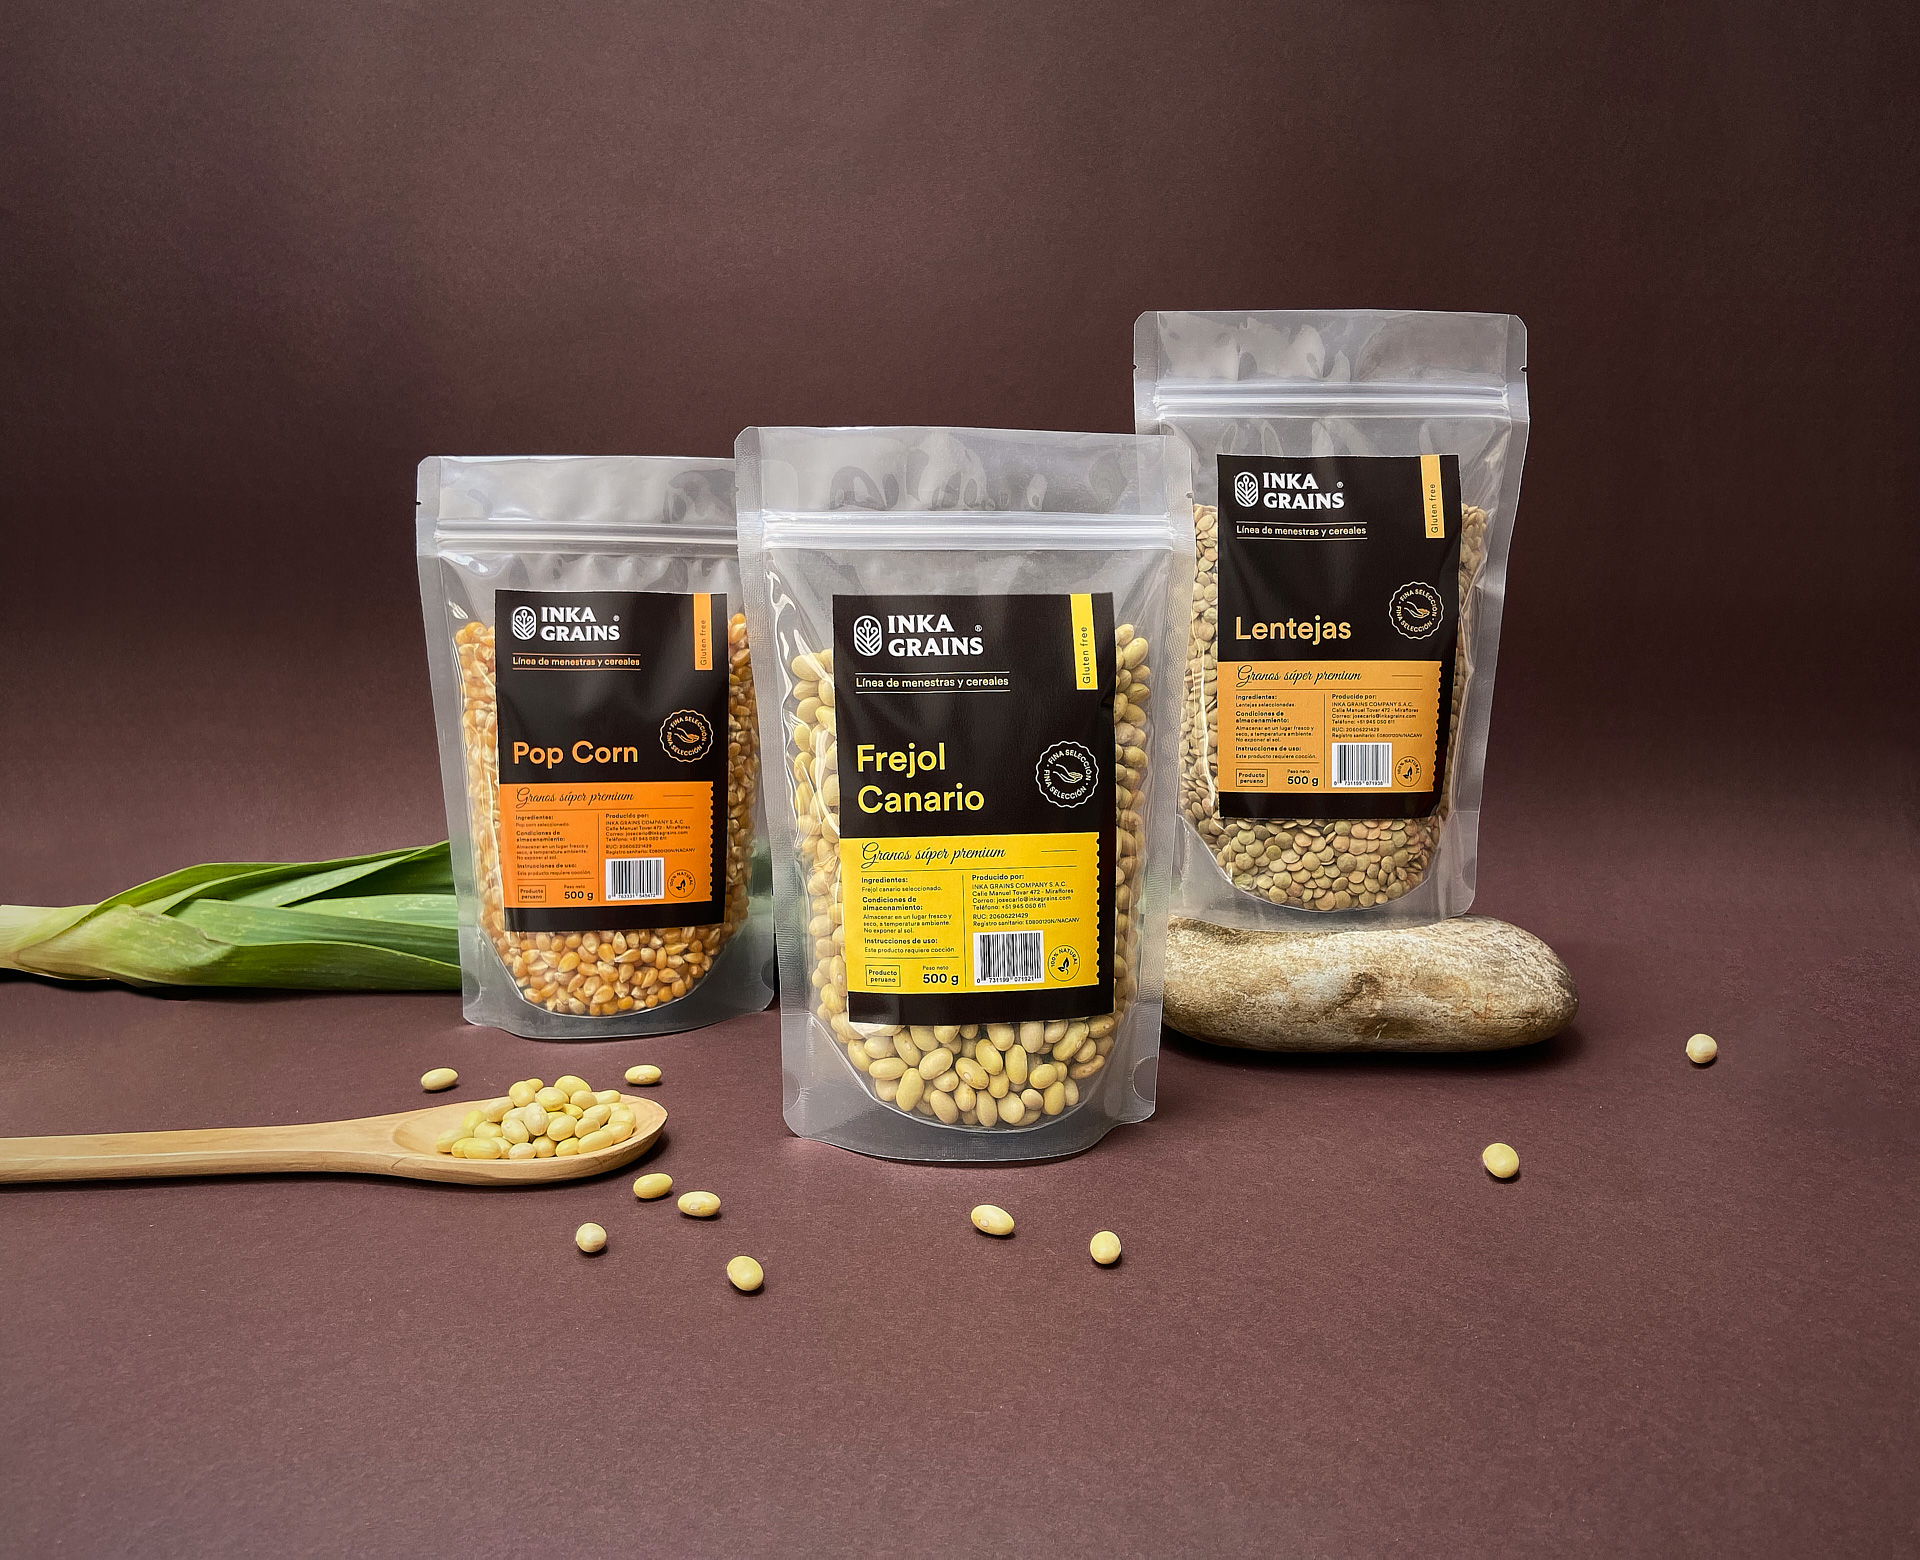 Nicolás Pérez Created The Brand and Packaging Design For Inka Grains